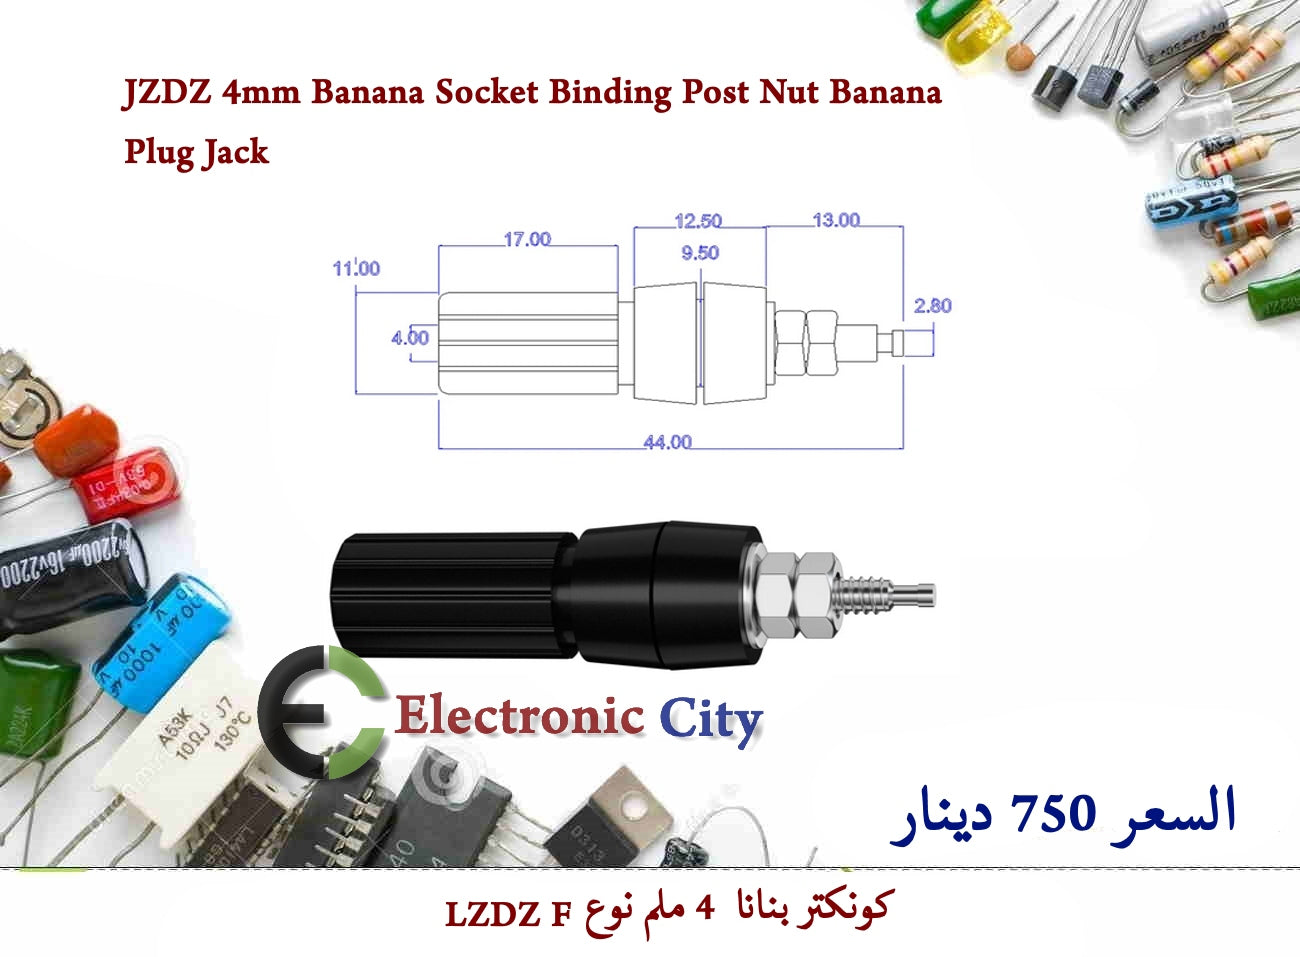 JZDZ 4mm Banana Socket Binding Post Nut Banana Plug Jack Black  #U6